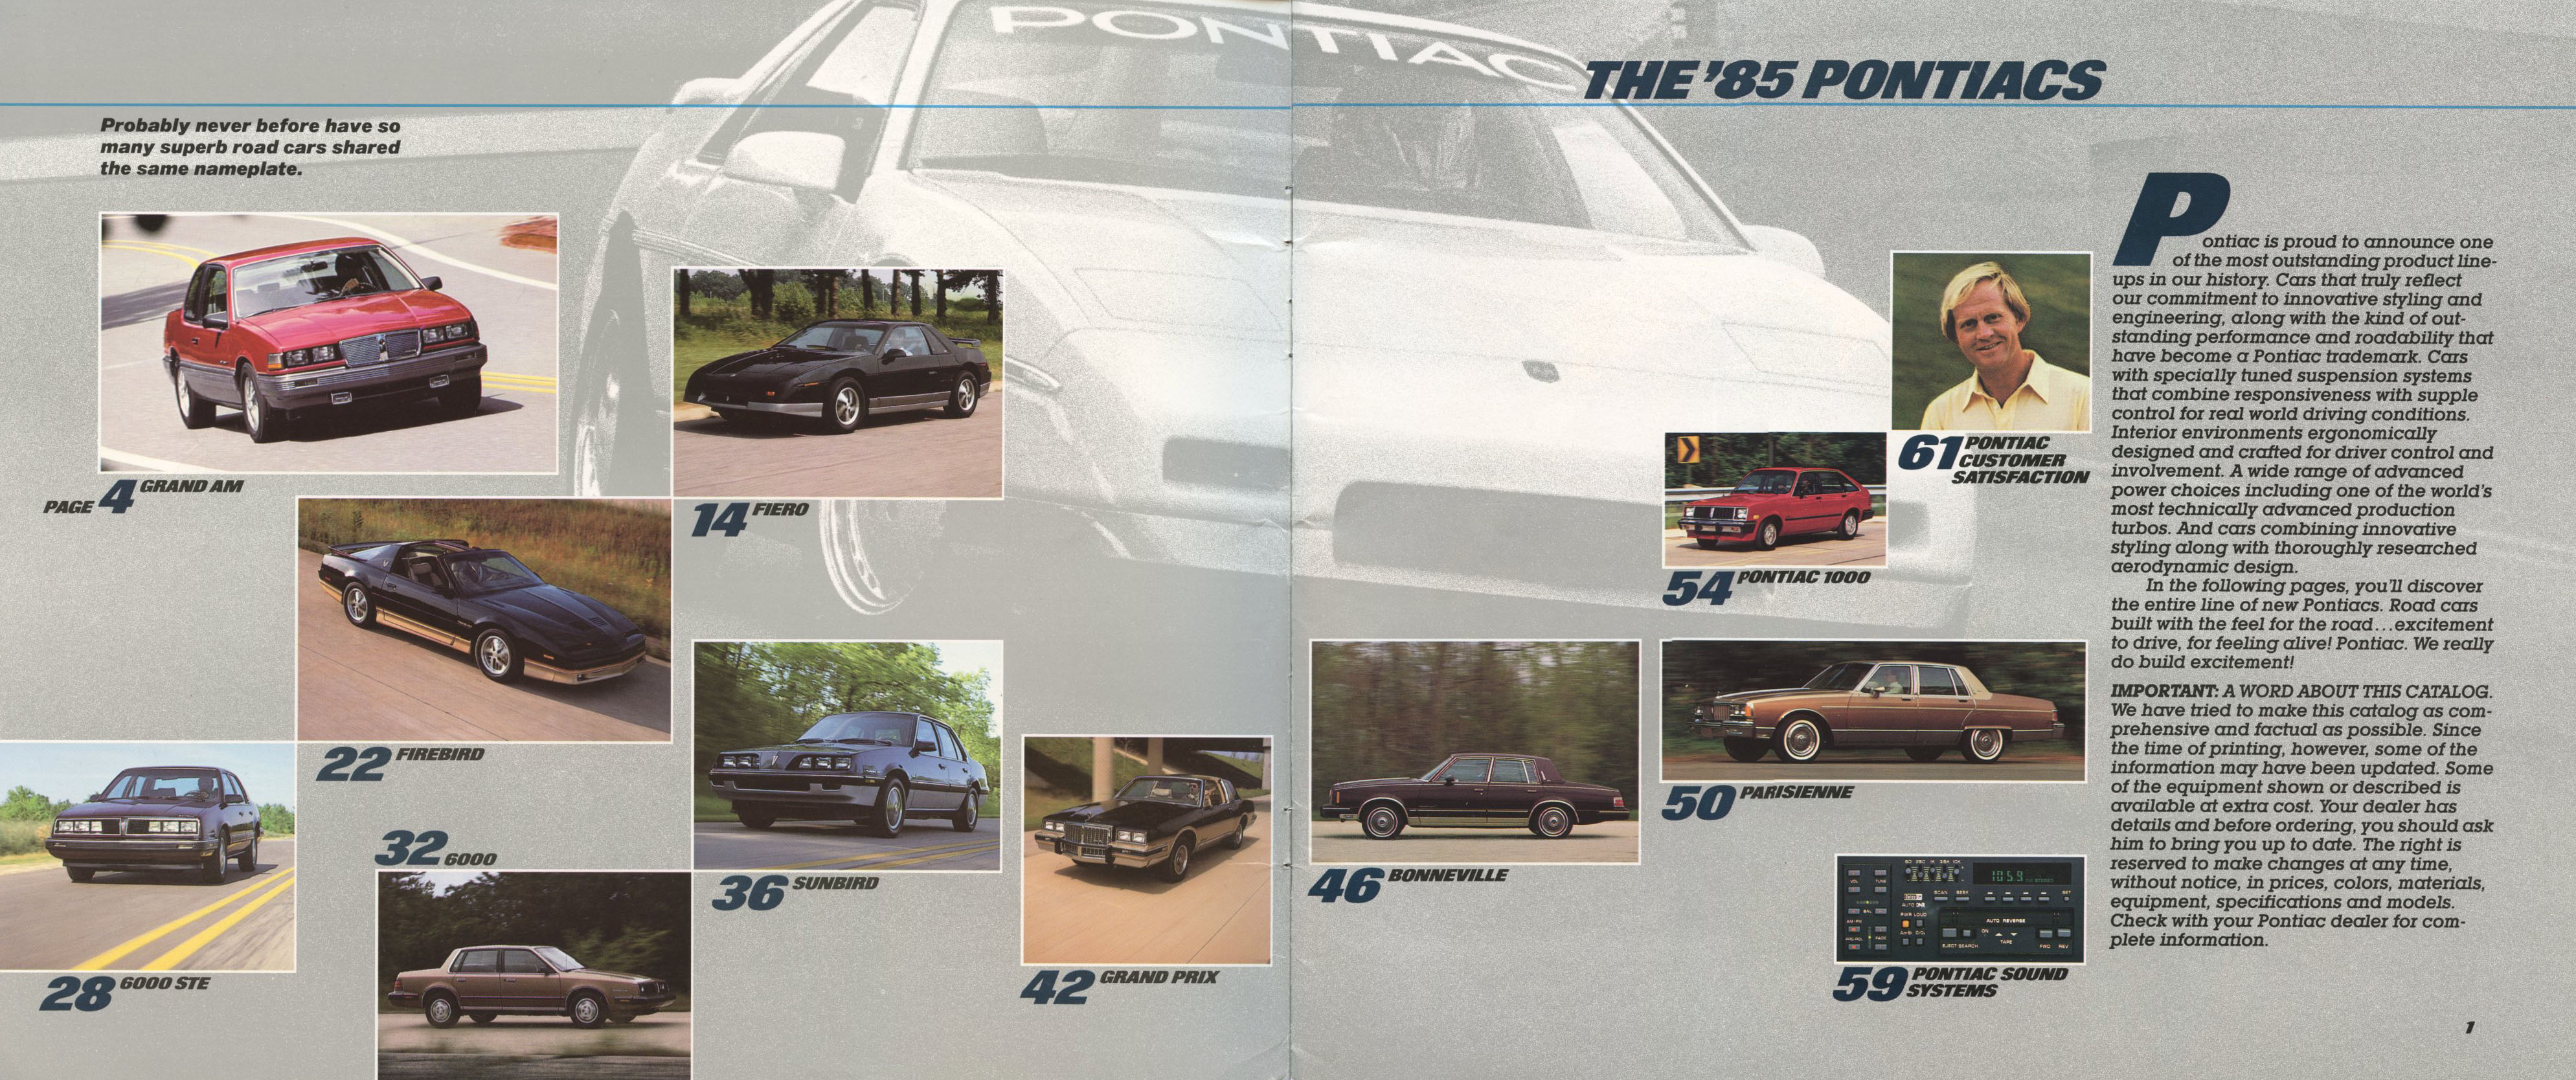 1985 Pontiac Full Line Prestige-00a-01